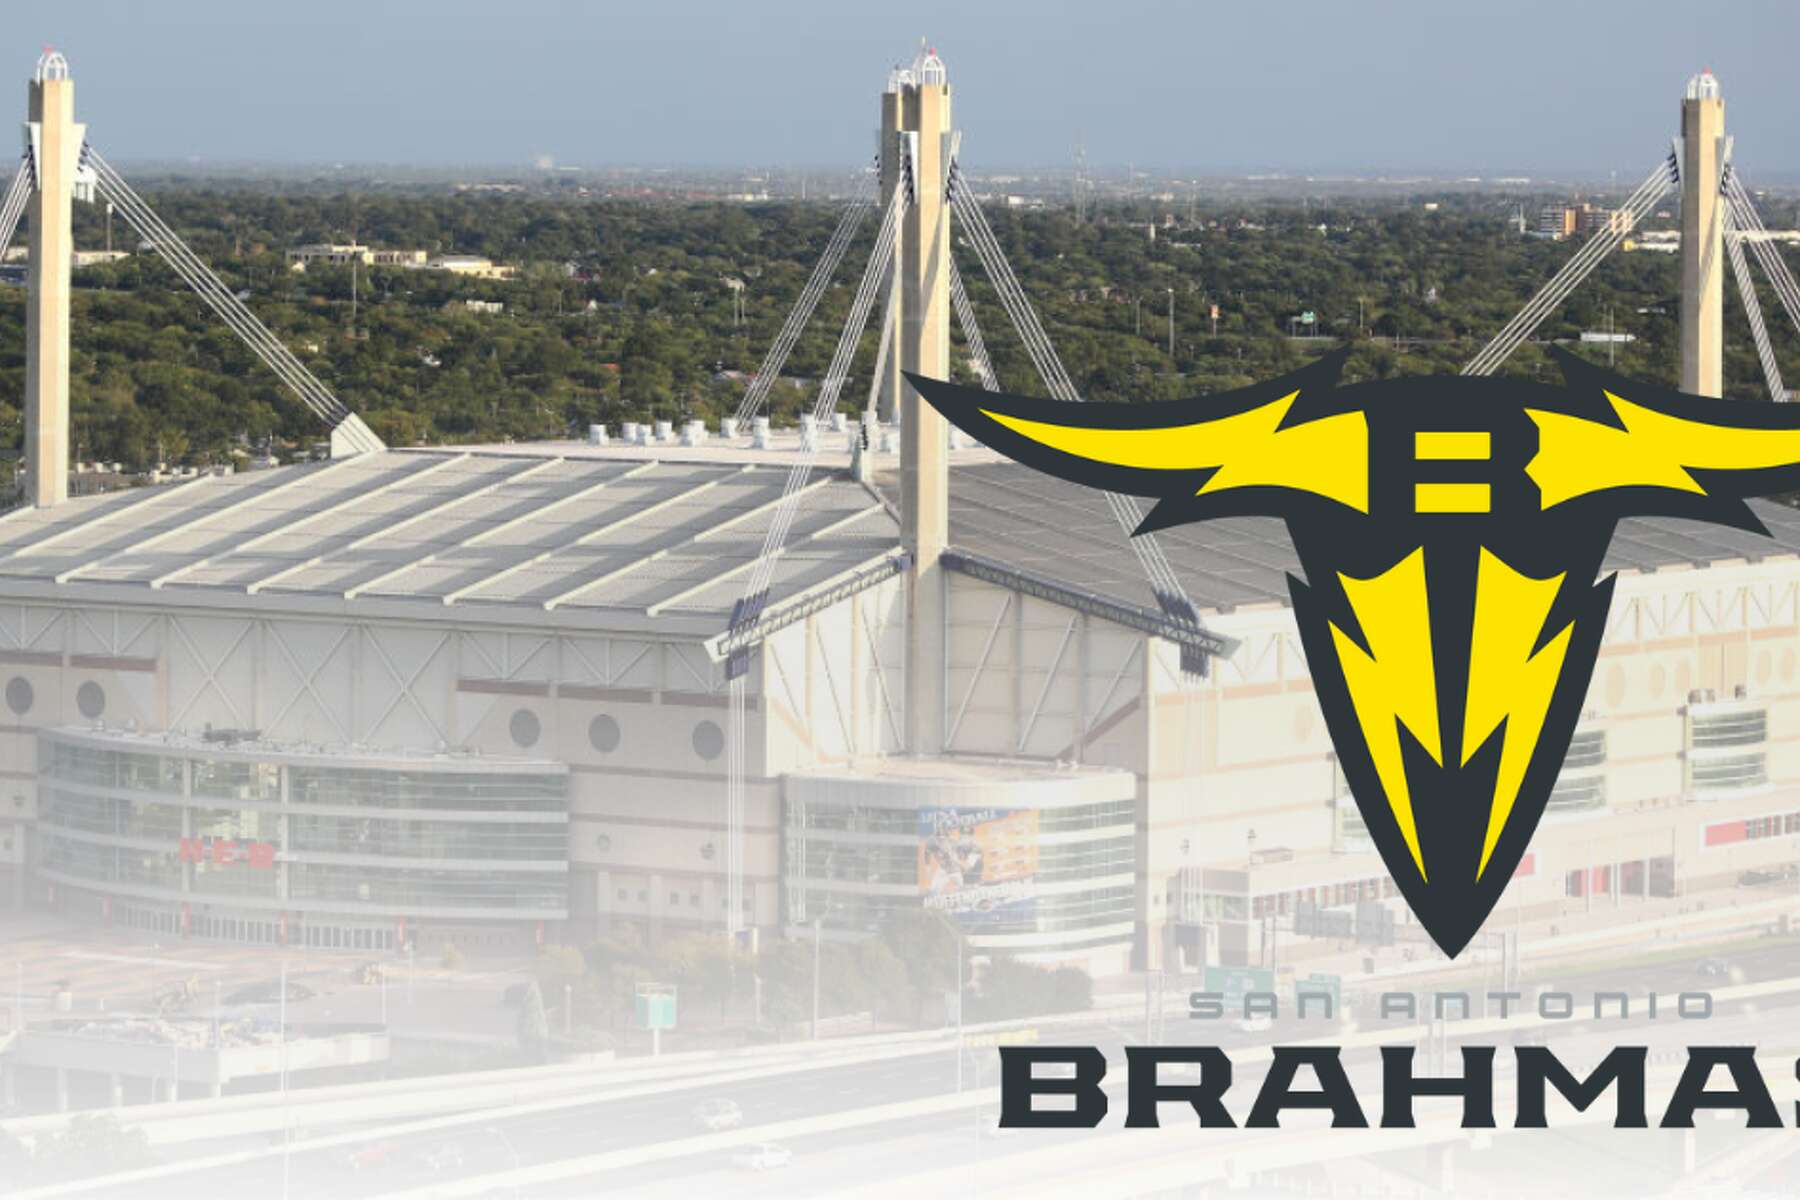 San Antonio Brahmas announce XFL schedule; will play St. Louis